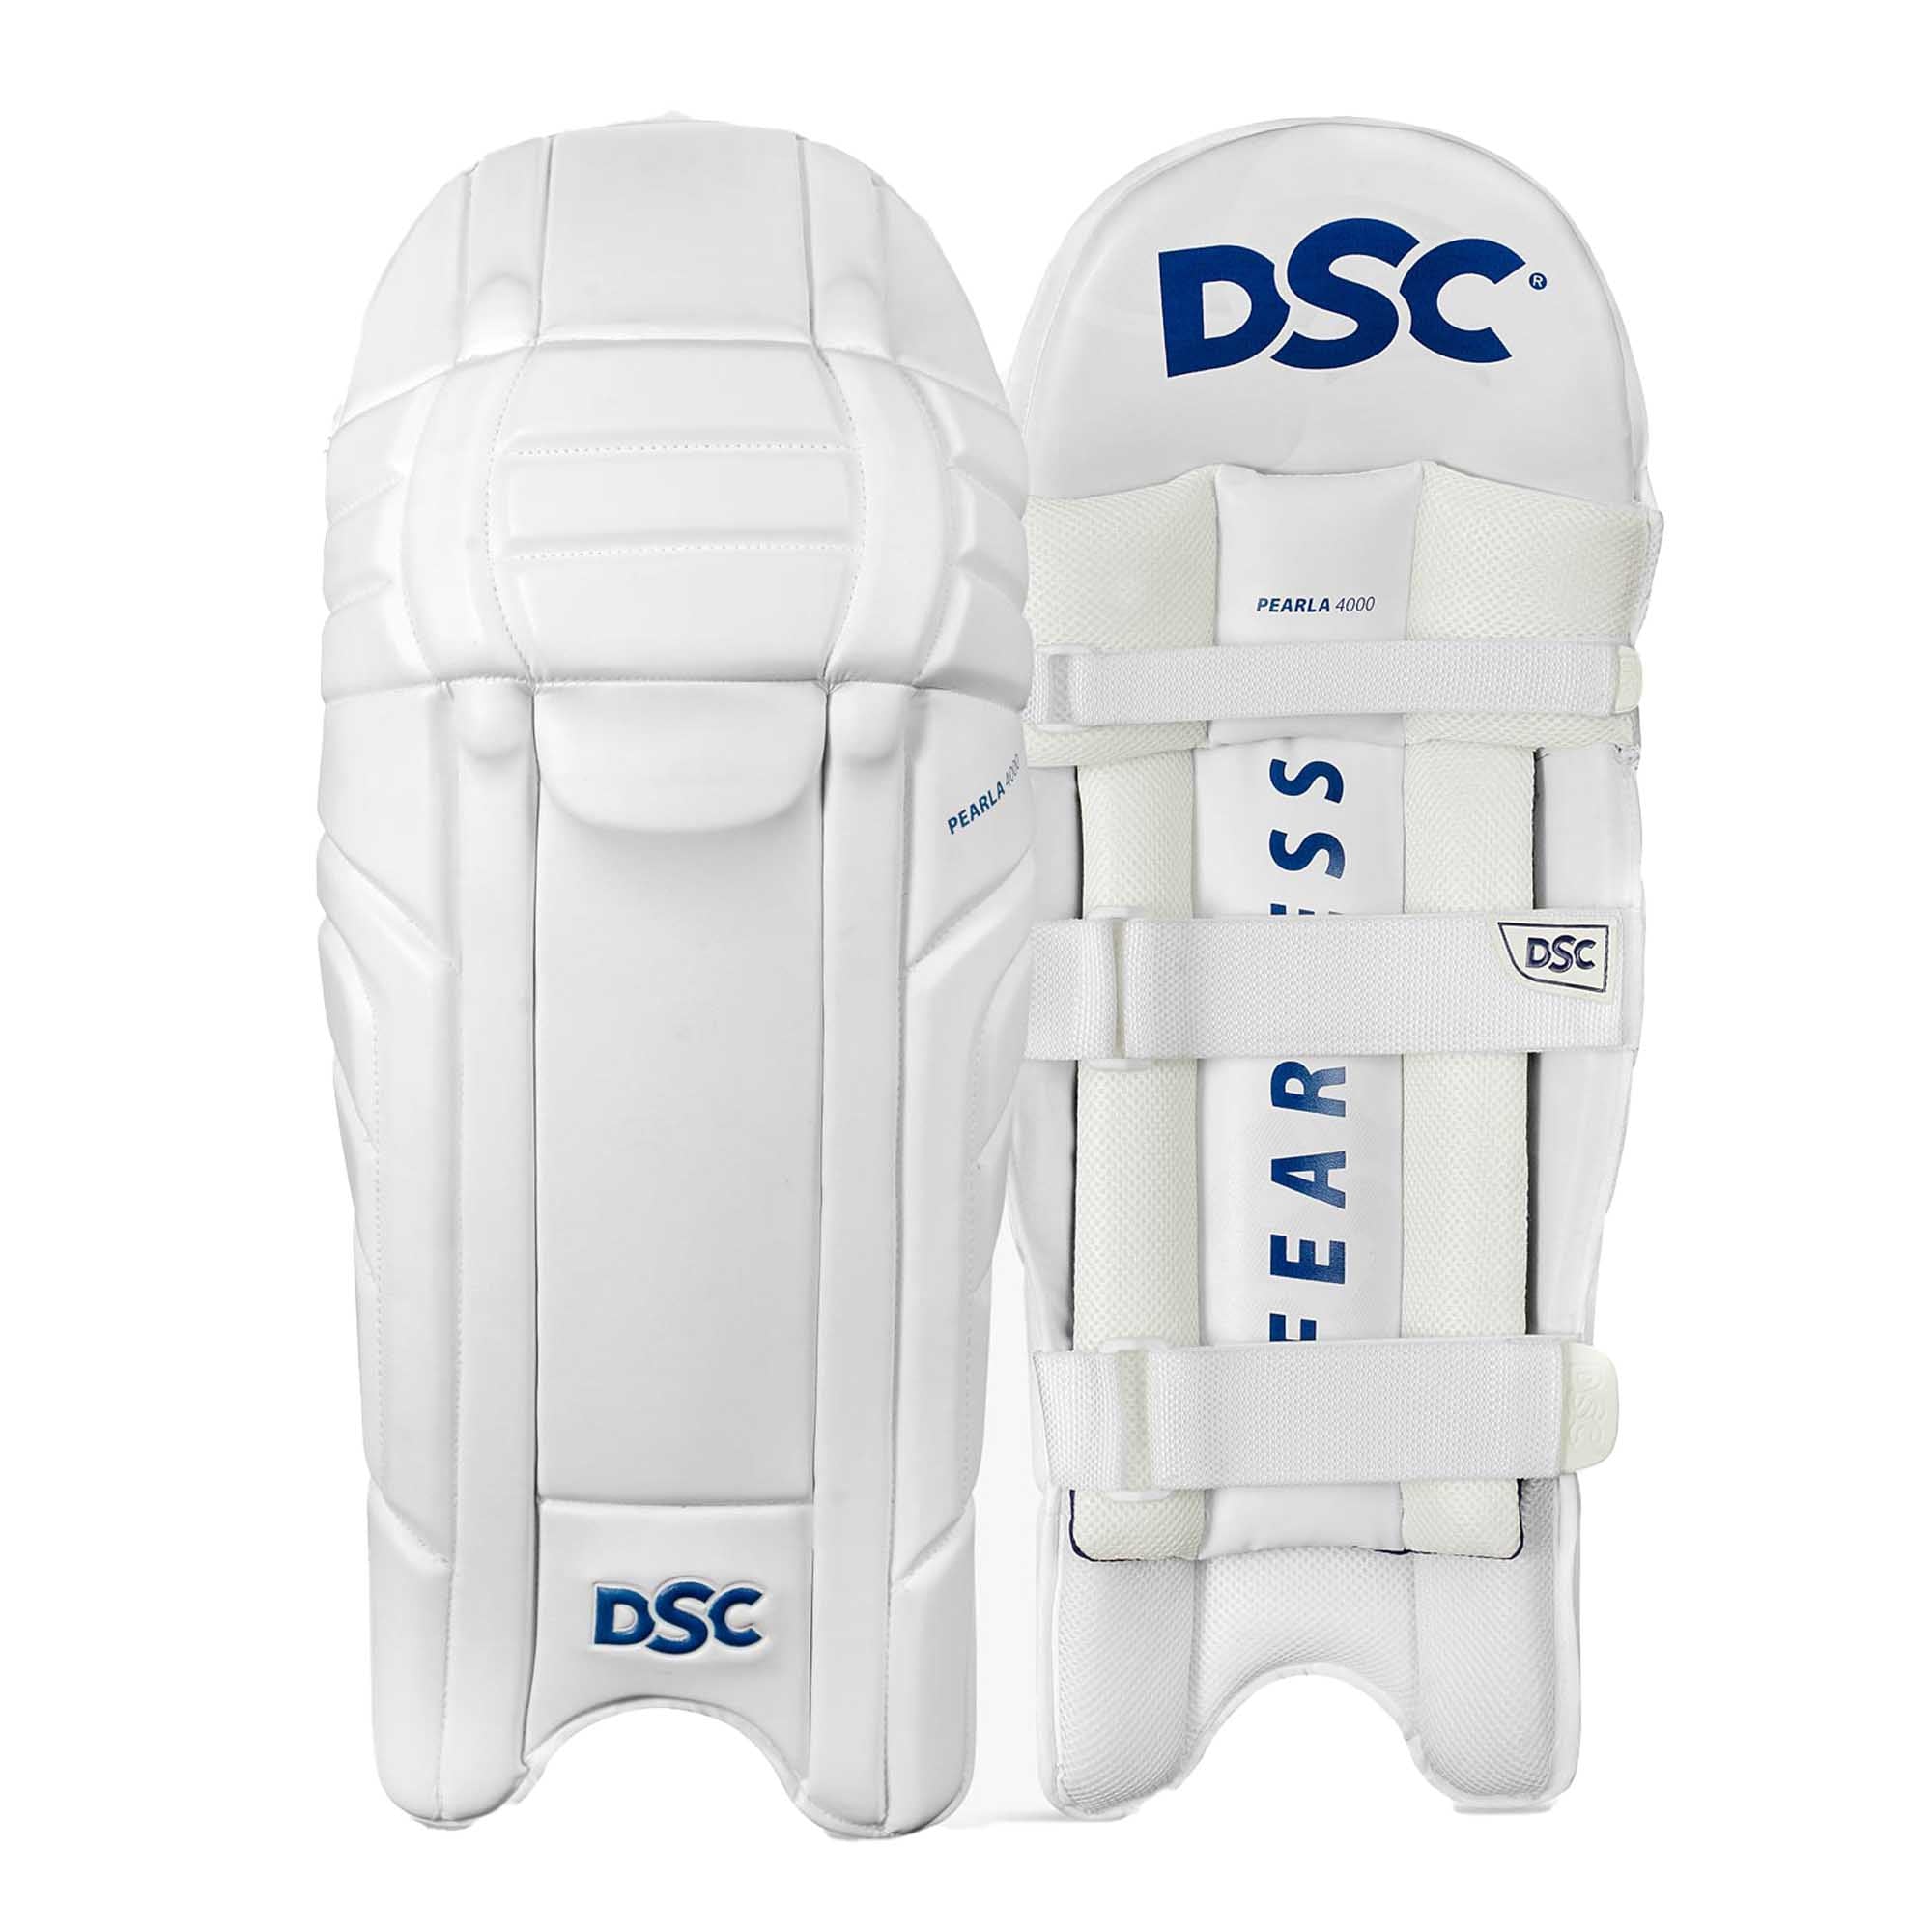 DSC Pearla 4000 Cricket Batting Pads